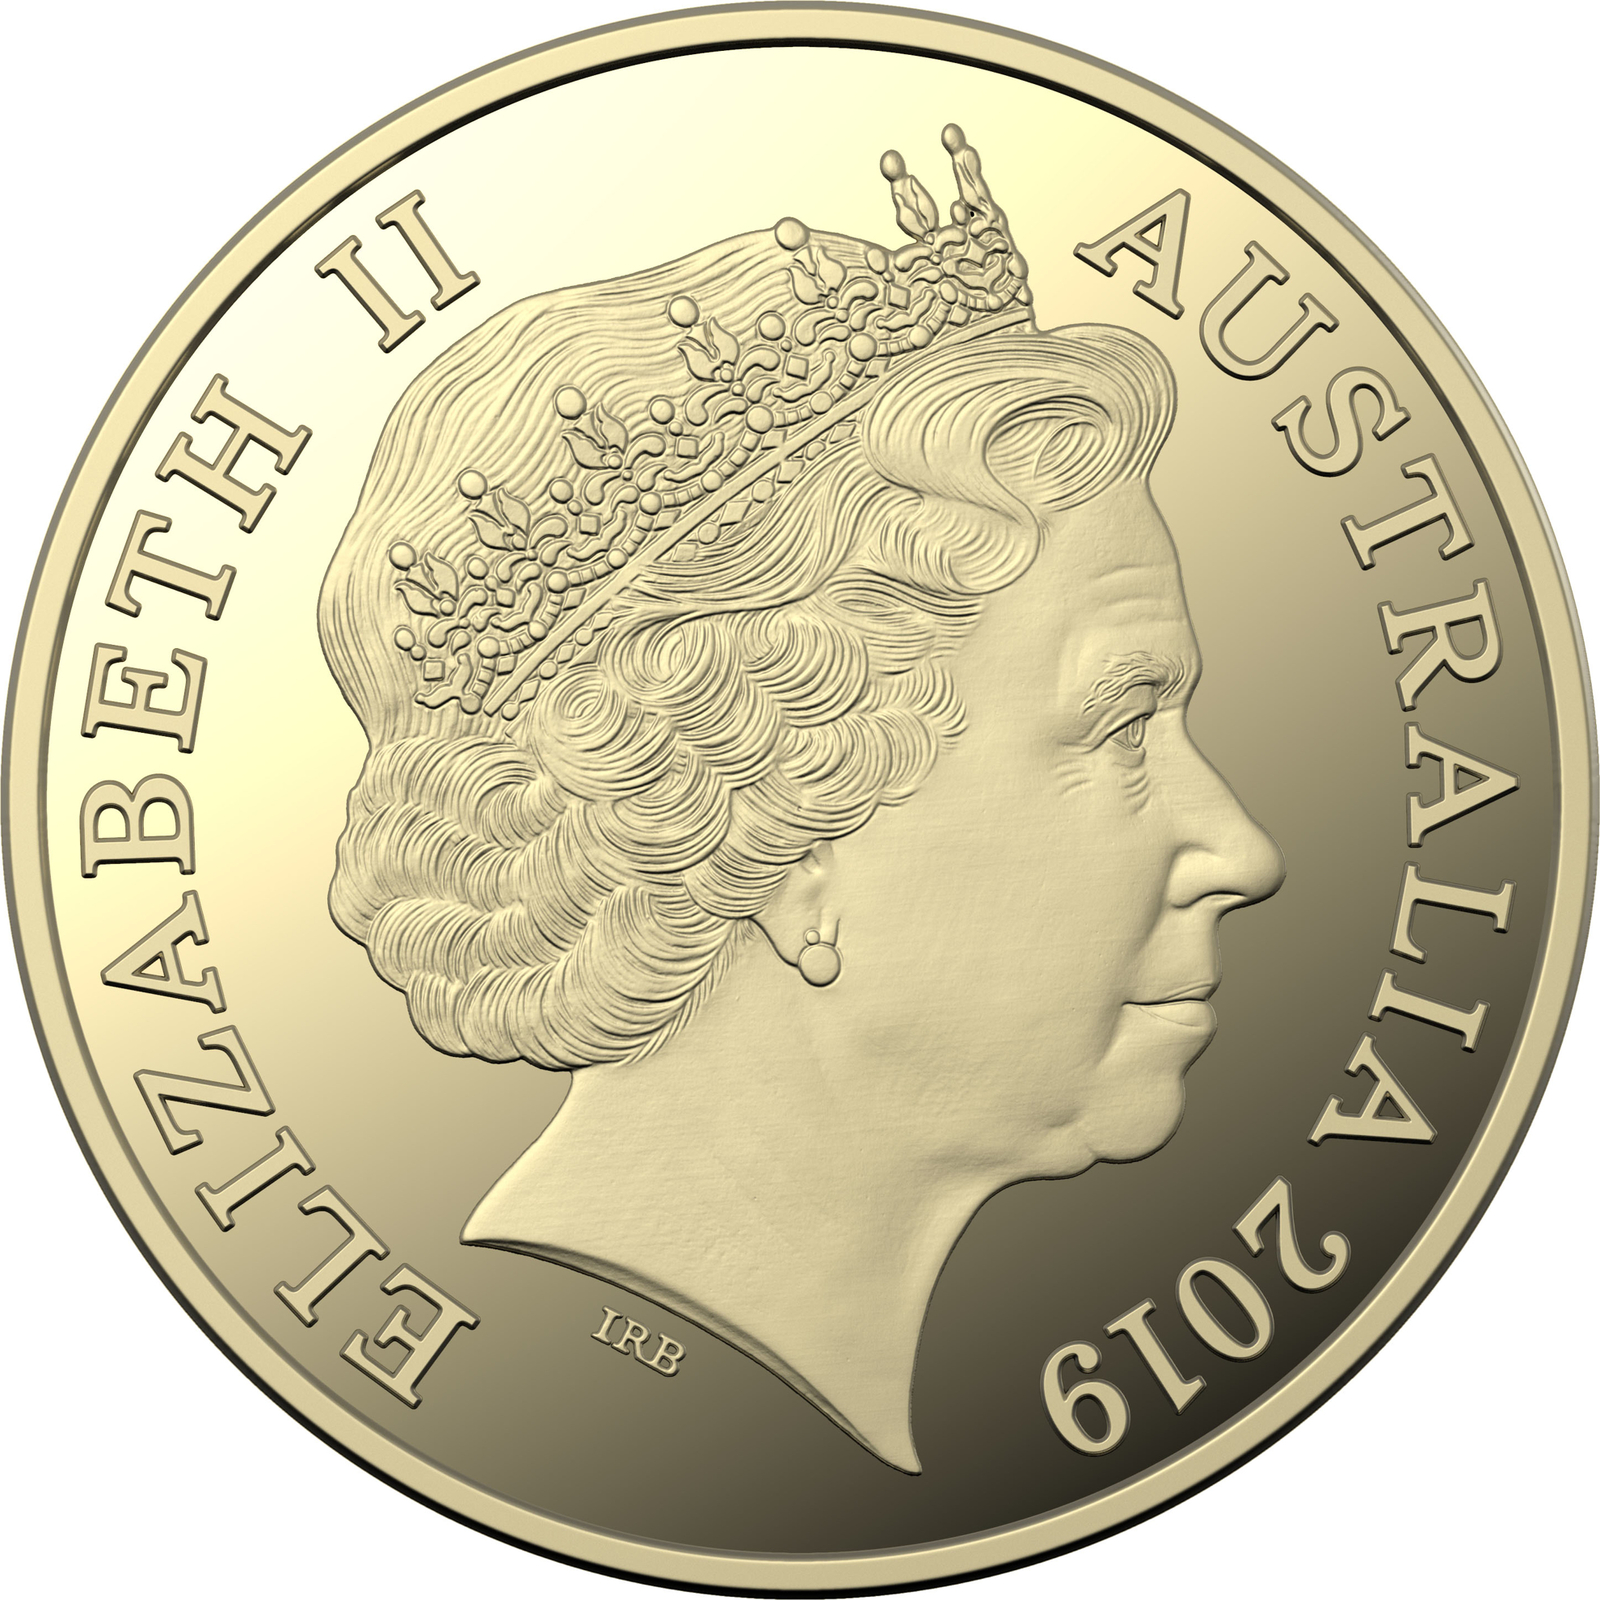 2019 $1 "F" Great Australian Coin Hunt